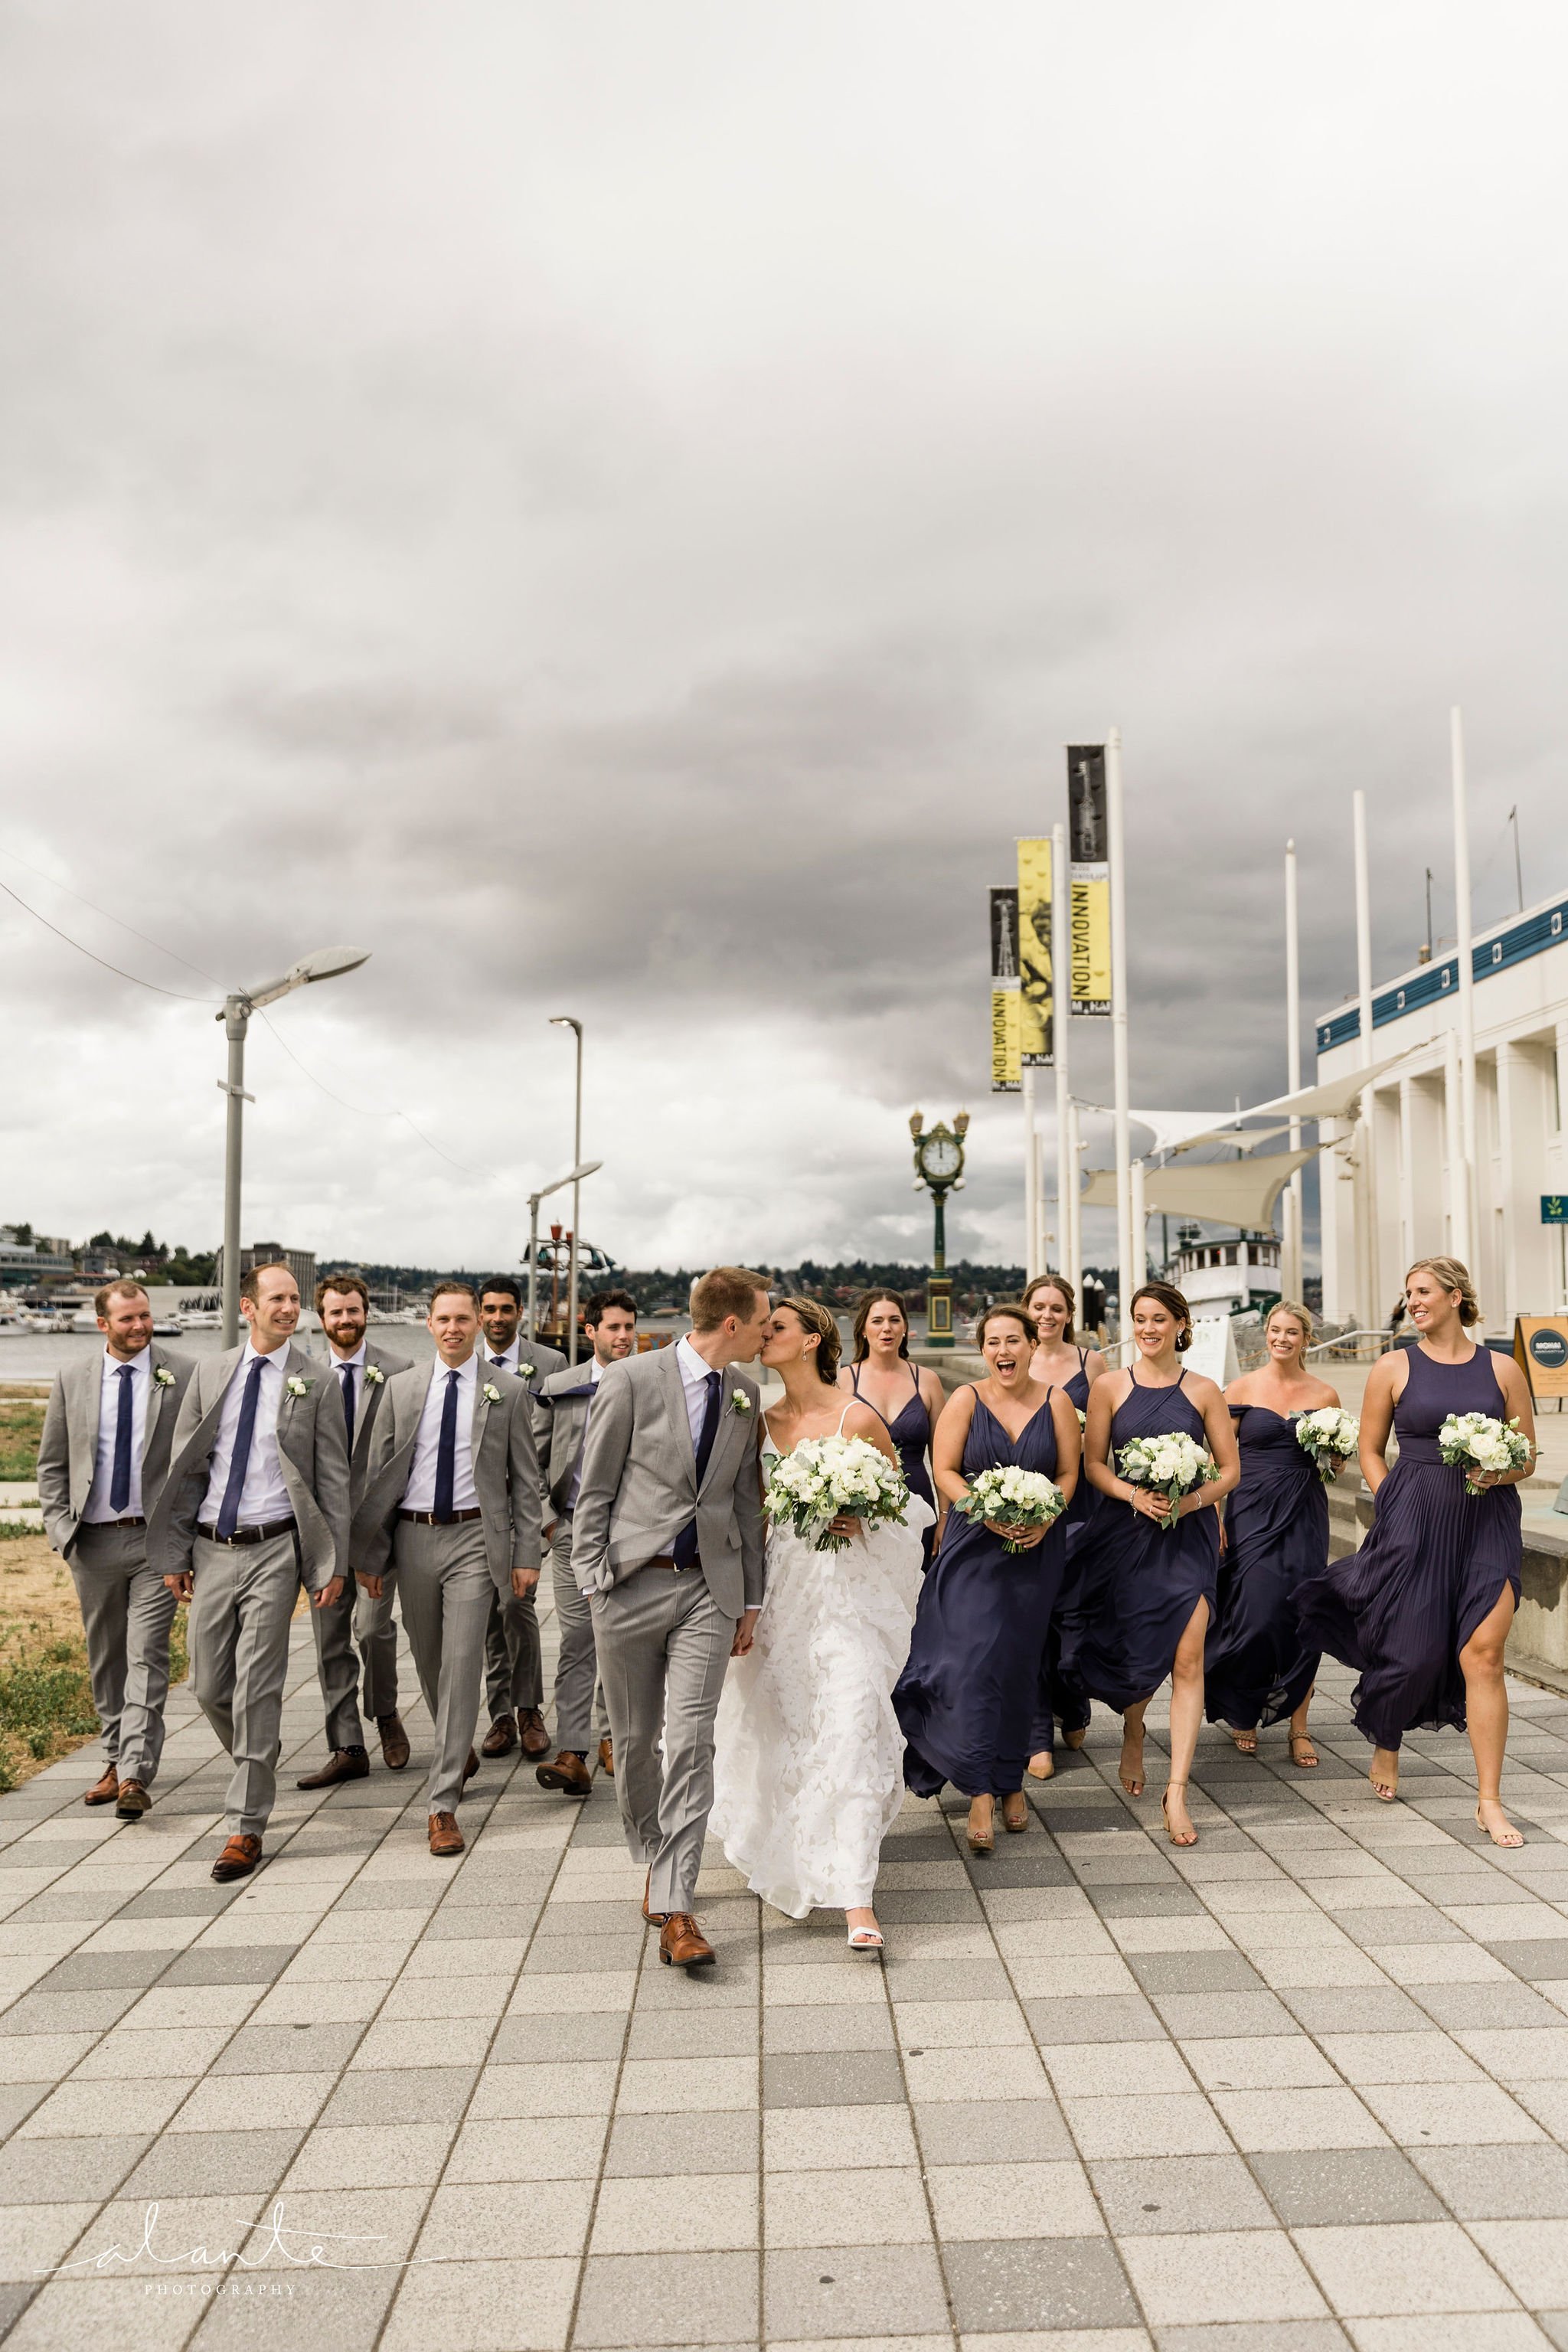 Alante-Photography-Seattle-Washington-Wedding-Dockside-Dukes-Lake-Union-073.jpg